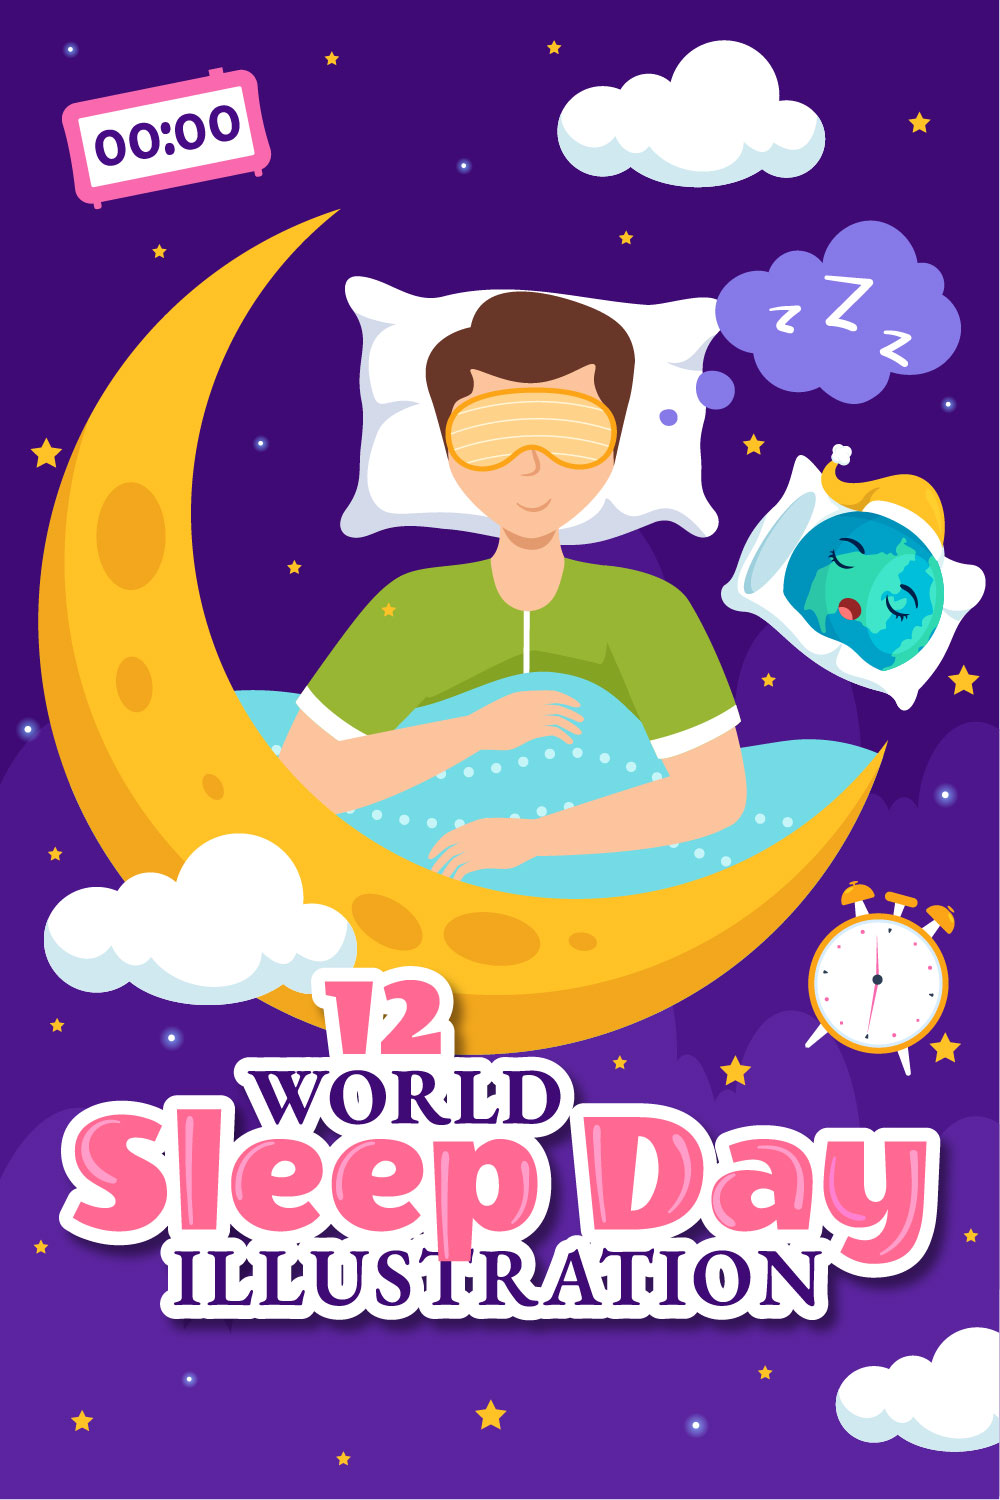 12 World Sleep Day Illustration pinterest preview image.